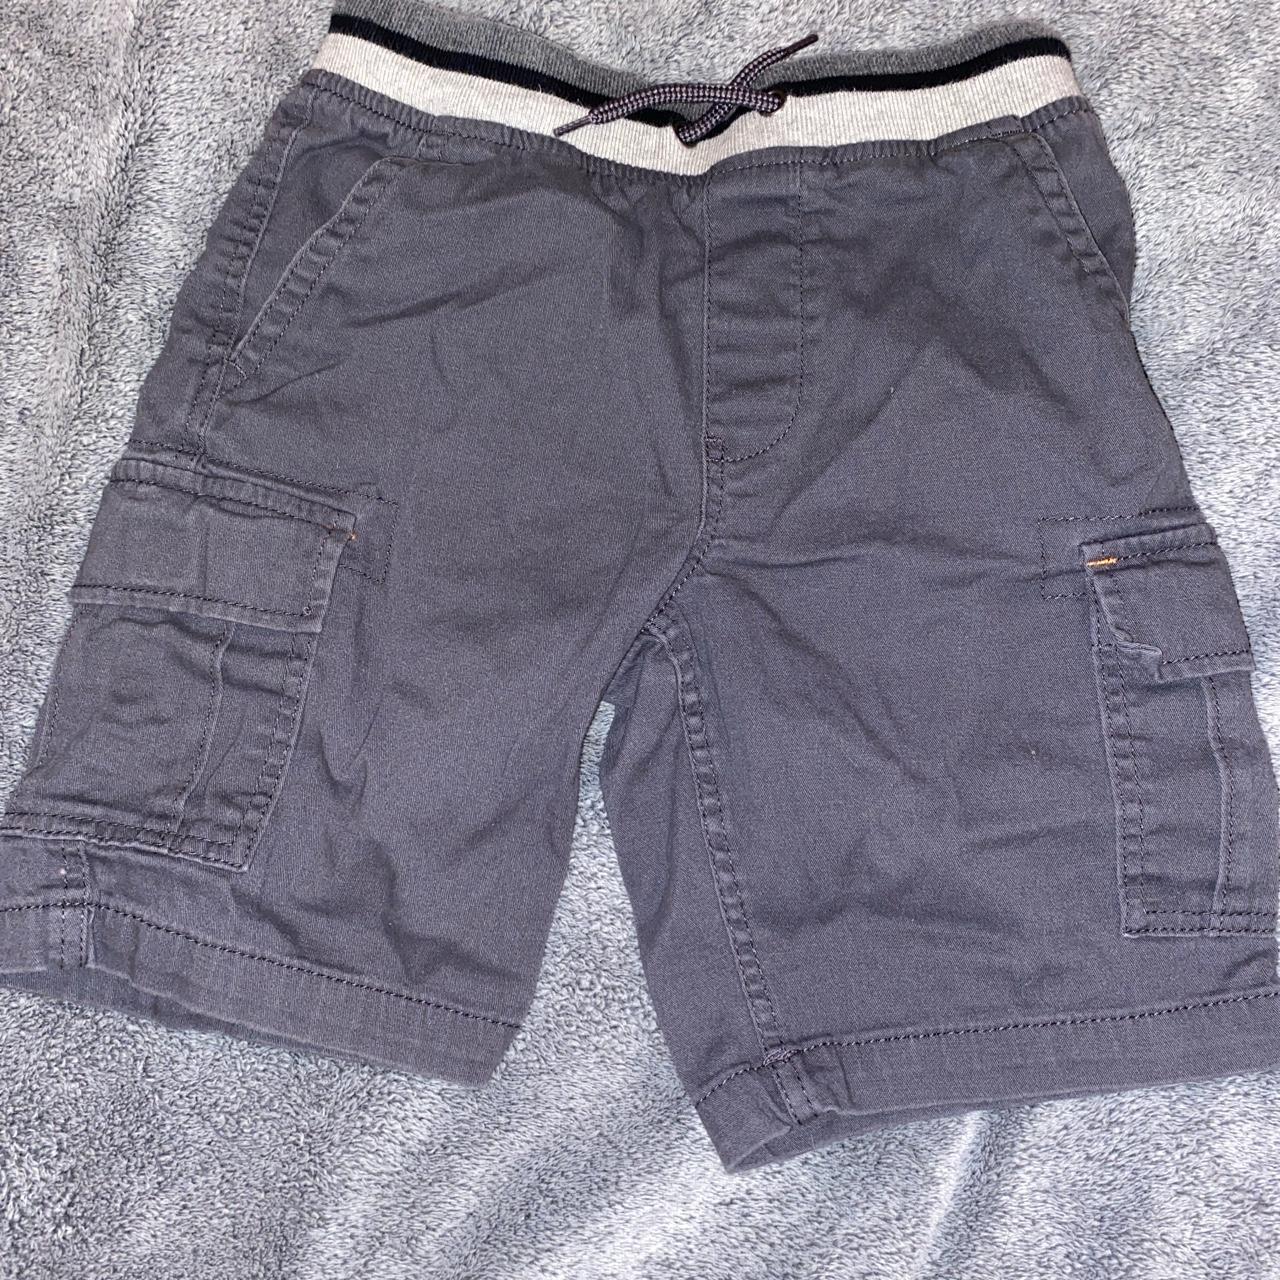 Grey boy cargo shorts 🌚 Size xxs / Kids large... - Depop